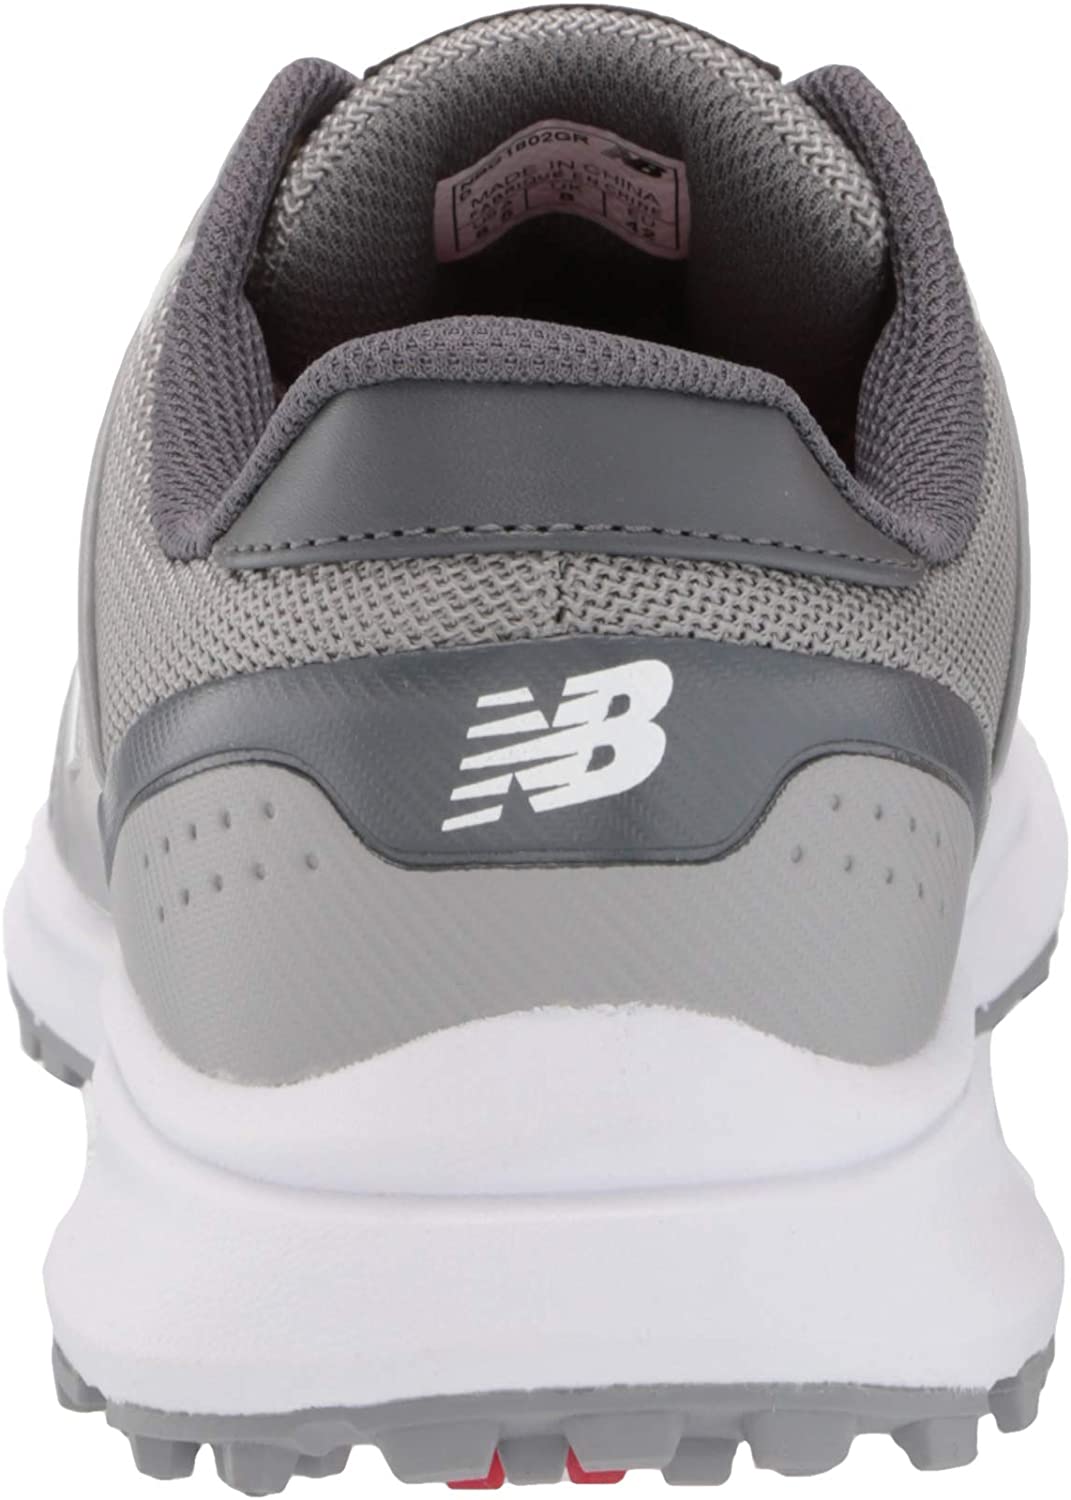 New Balance Mens Breeze V2 Golf Shoe 15 Grey - image 3 of 8